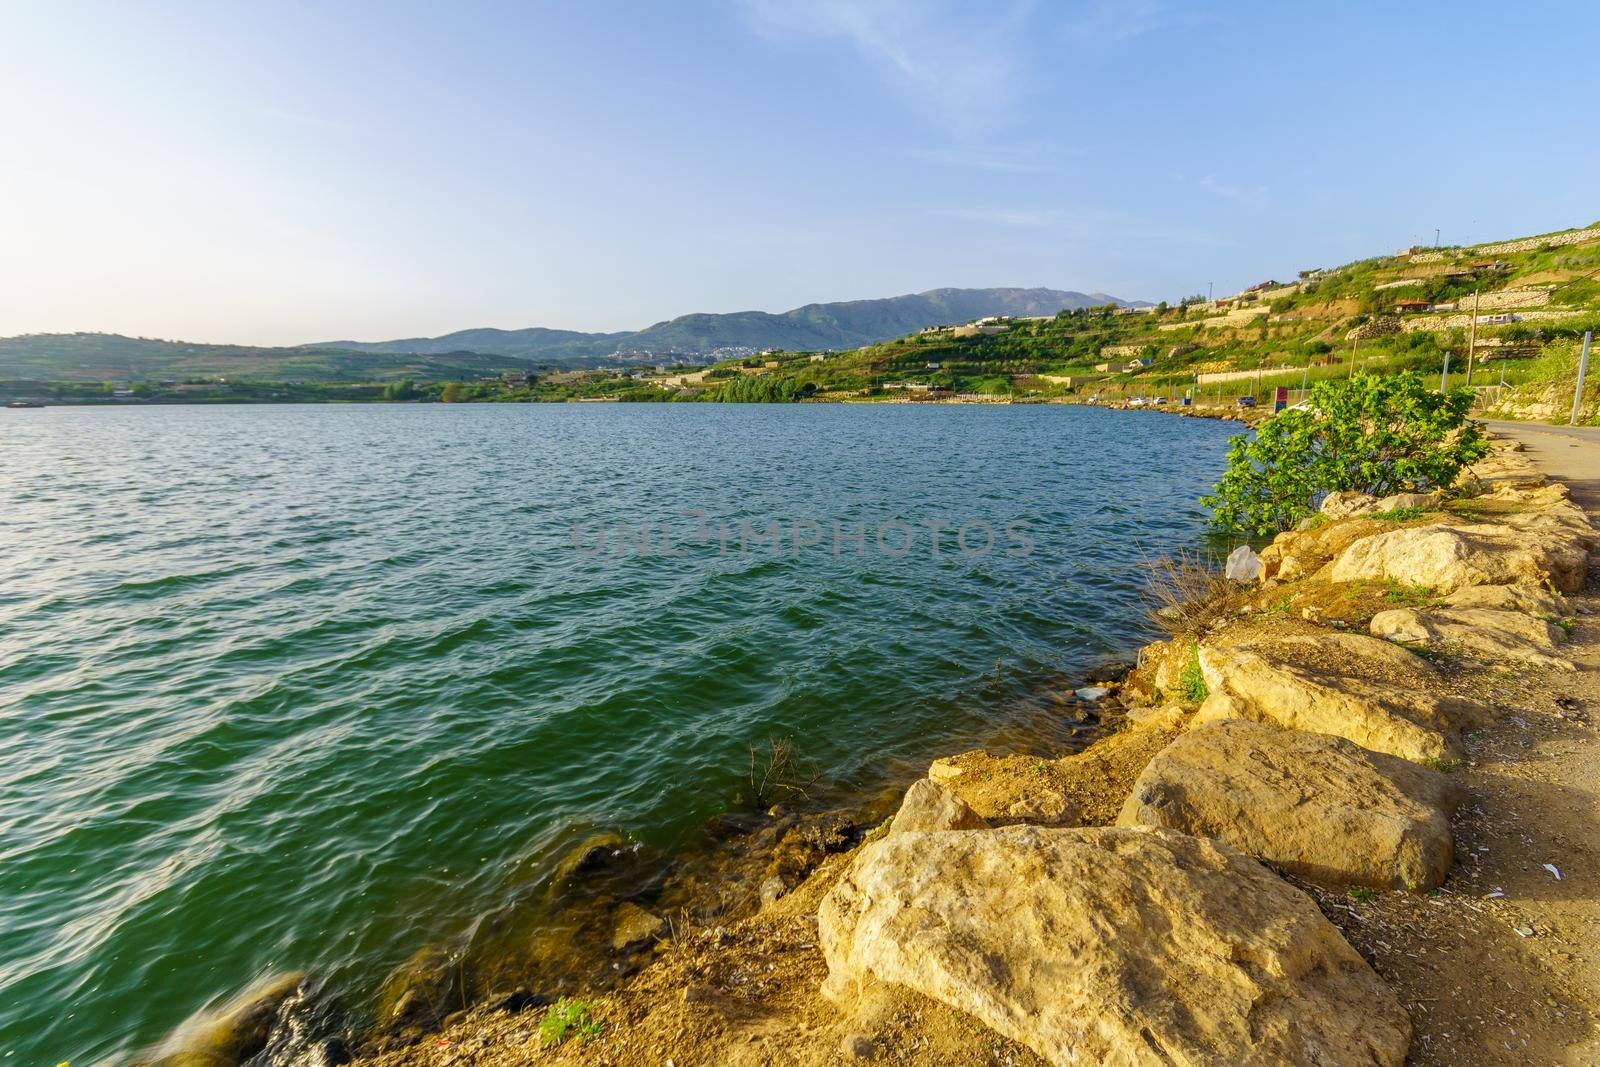 Lake Ram (Ram Pool) in the Golan Heights by RnDmS